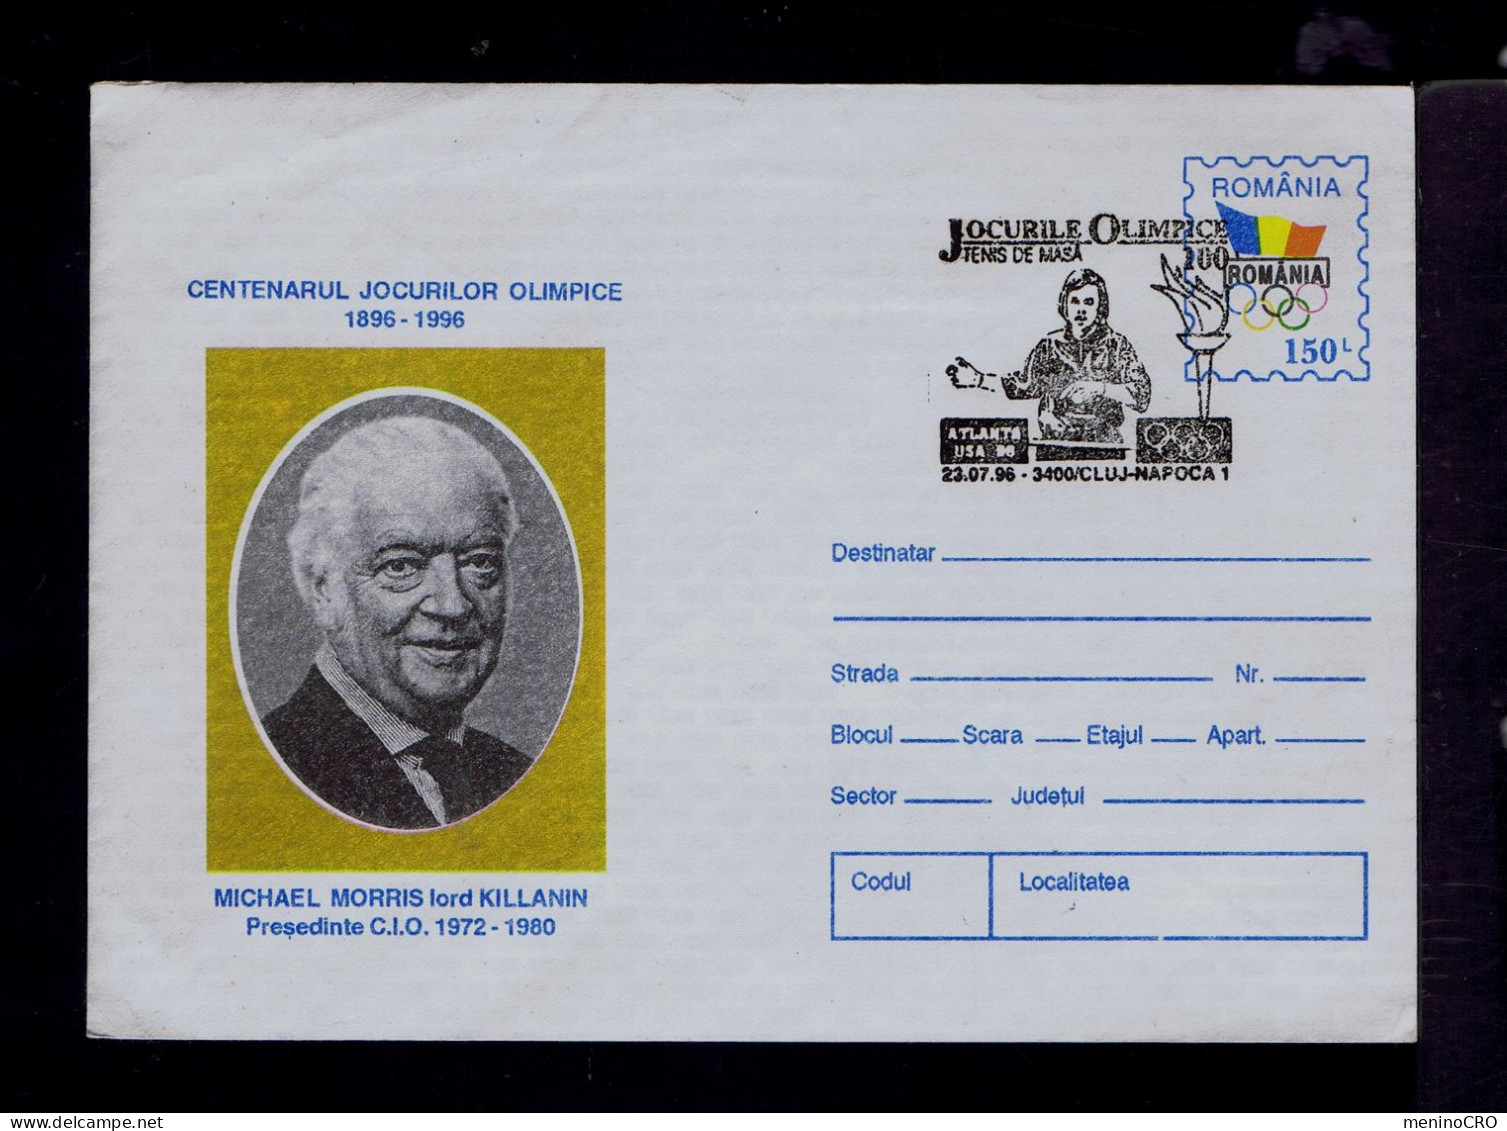 Gc8326 ROMANIA "M. MORRIS Lord KILLANIN" Cover Postal Stationery /1896-1996 JUCURILOR OLIMPIC Pres.1972/80 Atlanta USA - Tennis Tavolo